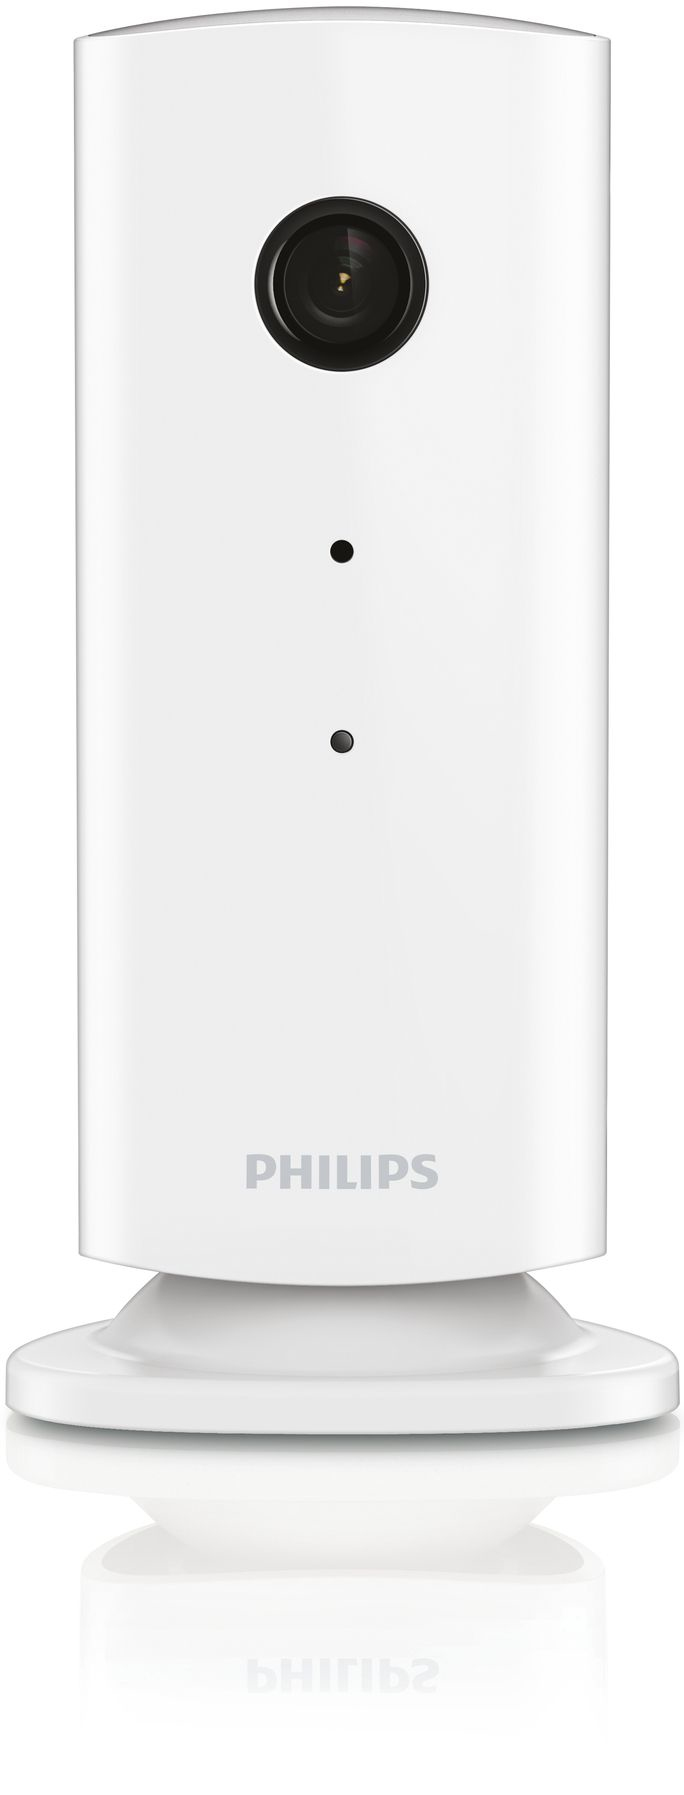 Philips Draadloze thuismonitor M100E/12 wit